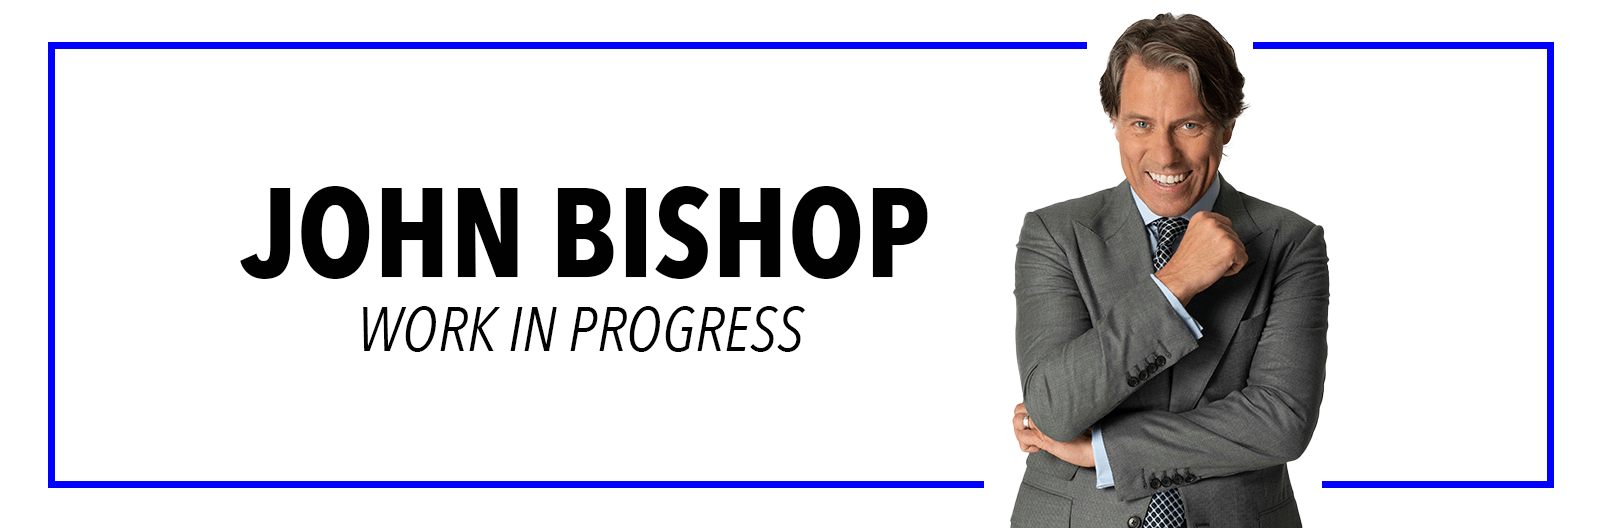 John Bishop: Work In Progress